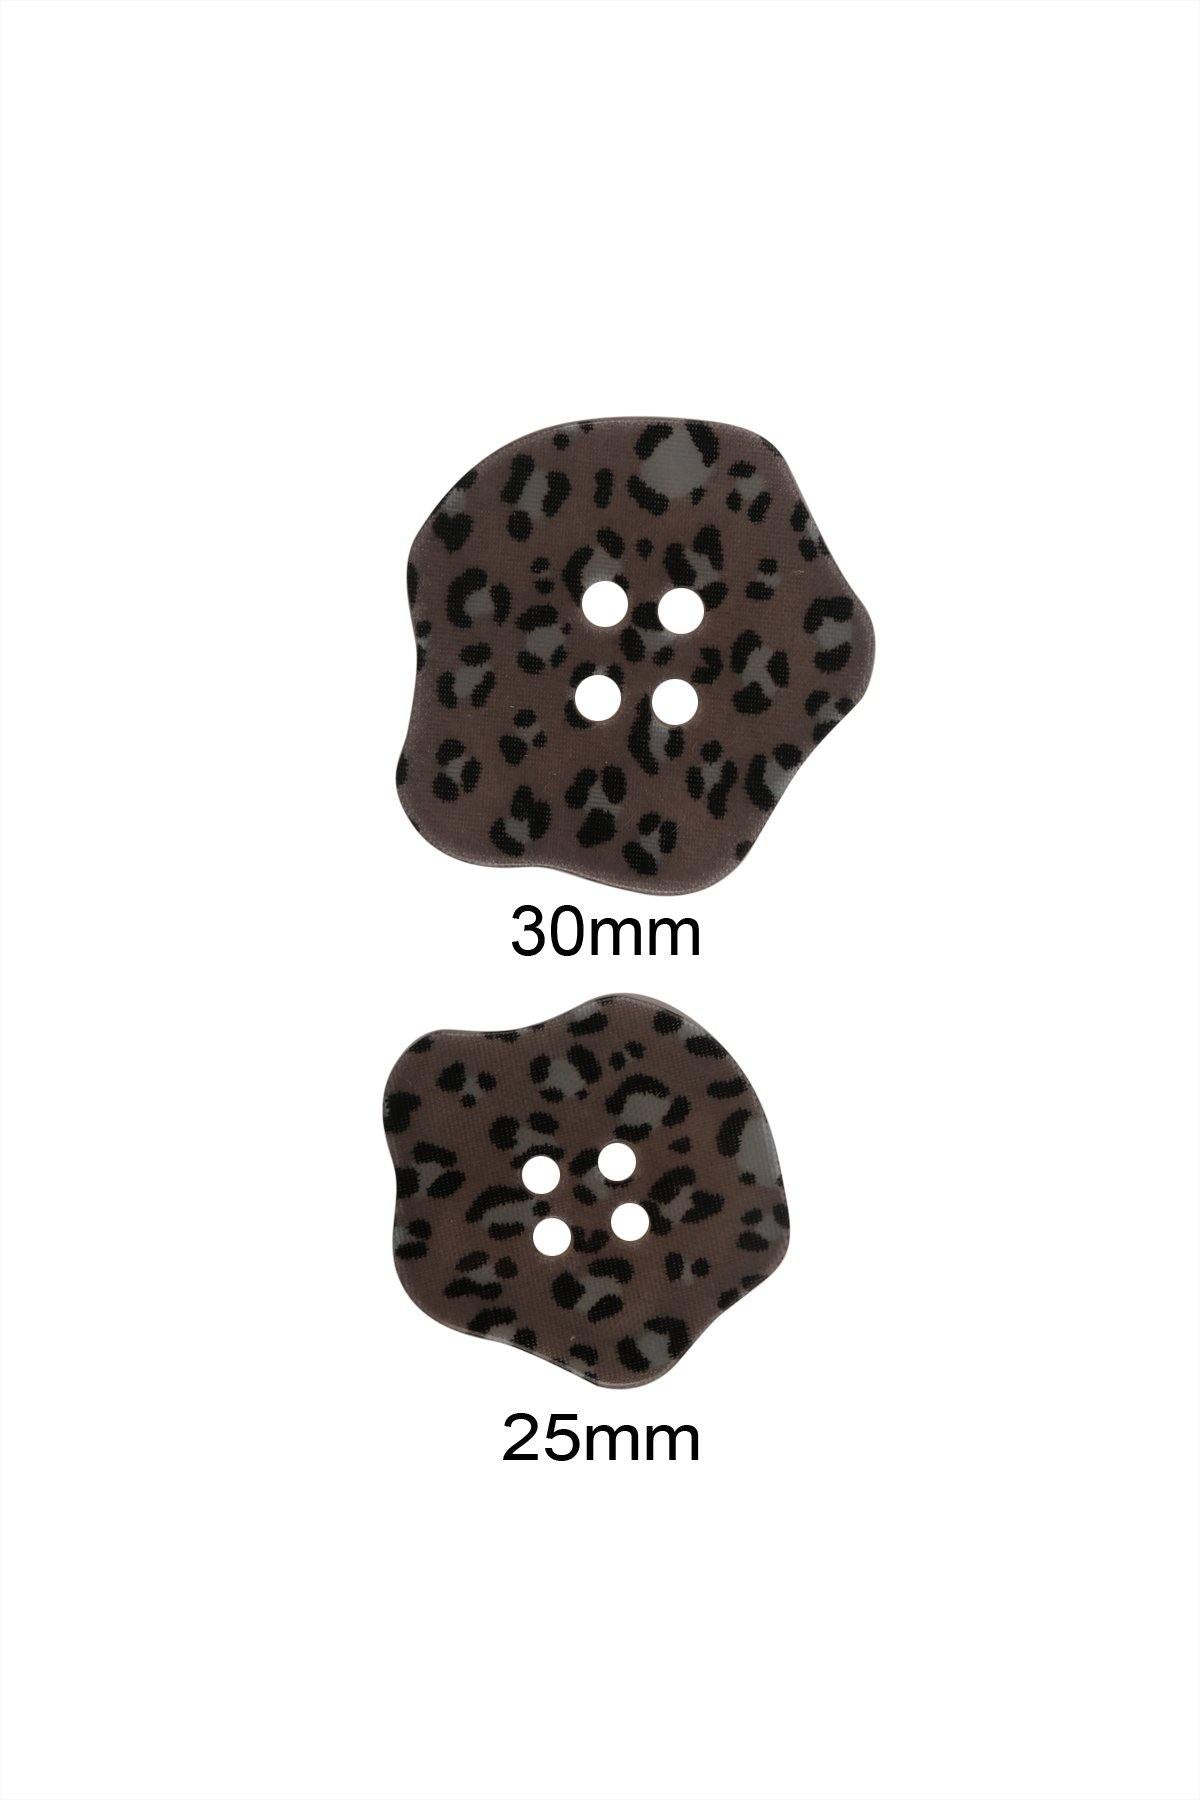 Organic Shape Leopard Print 4-Hole Acrylic Button